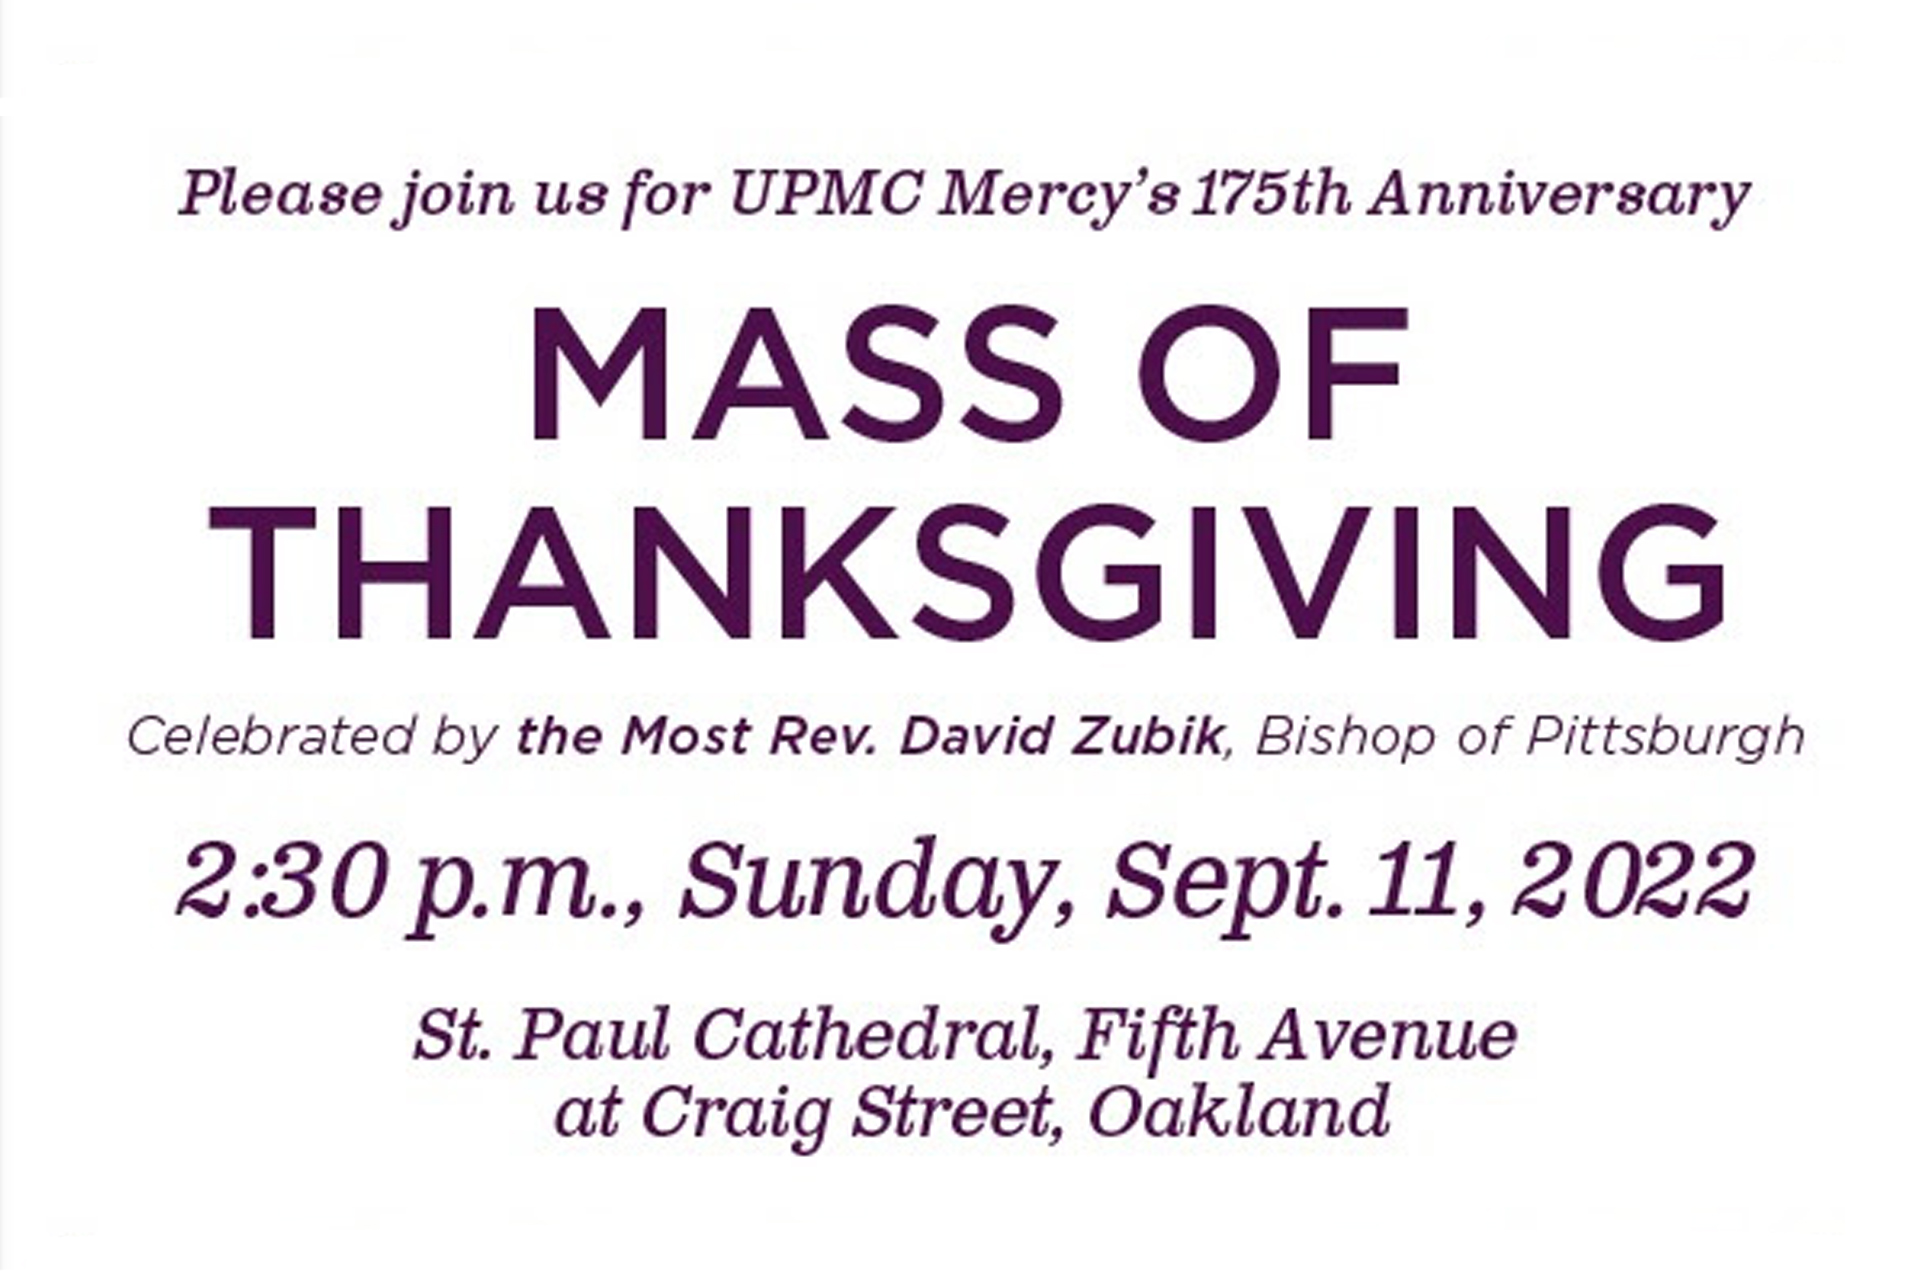 UPMC Mercy’s 175th Anniversary Mass of Thanksgiving